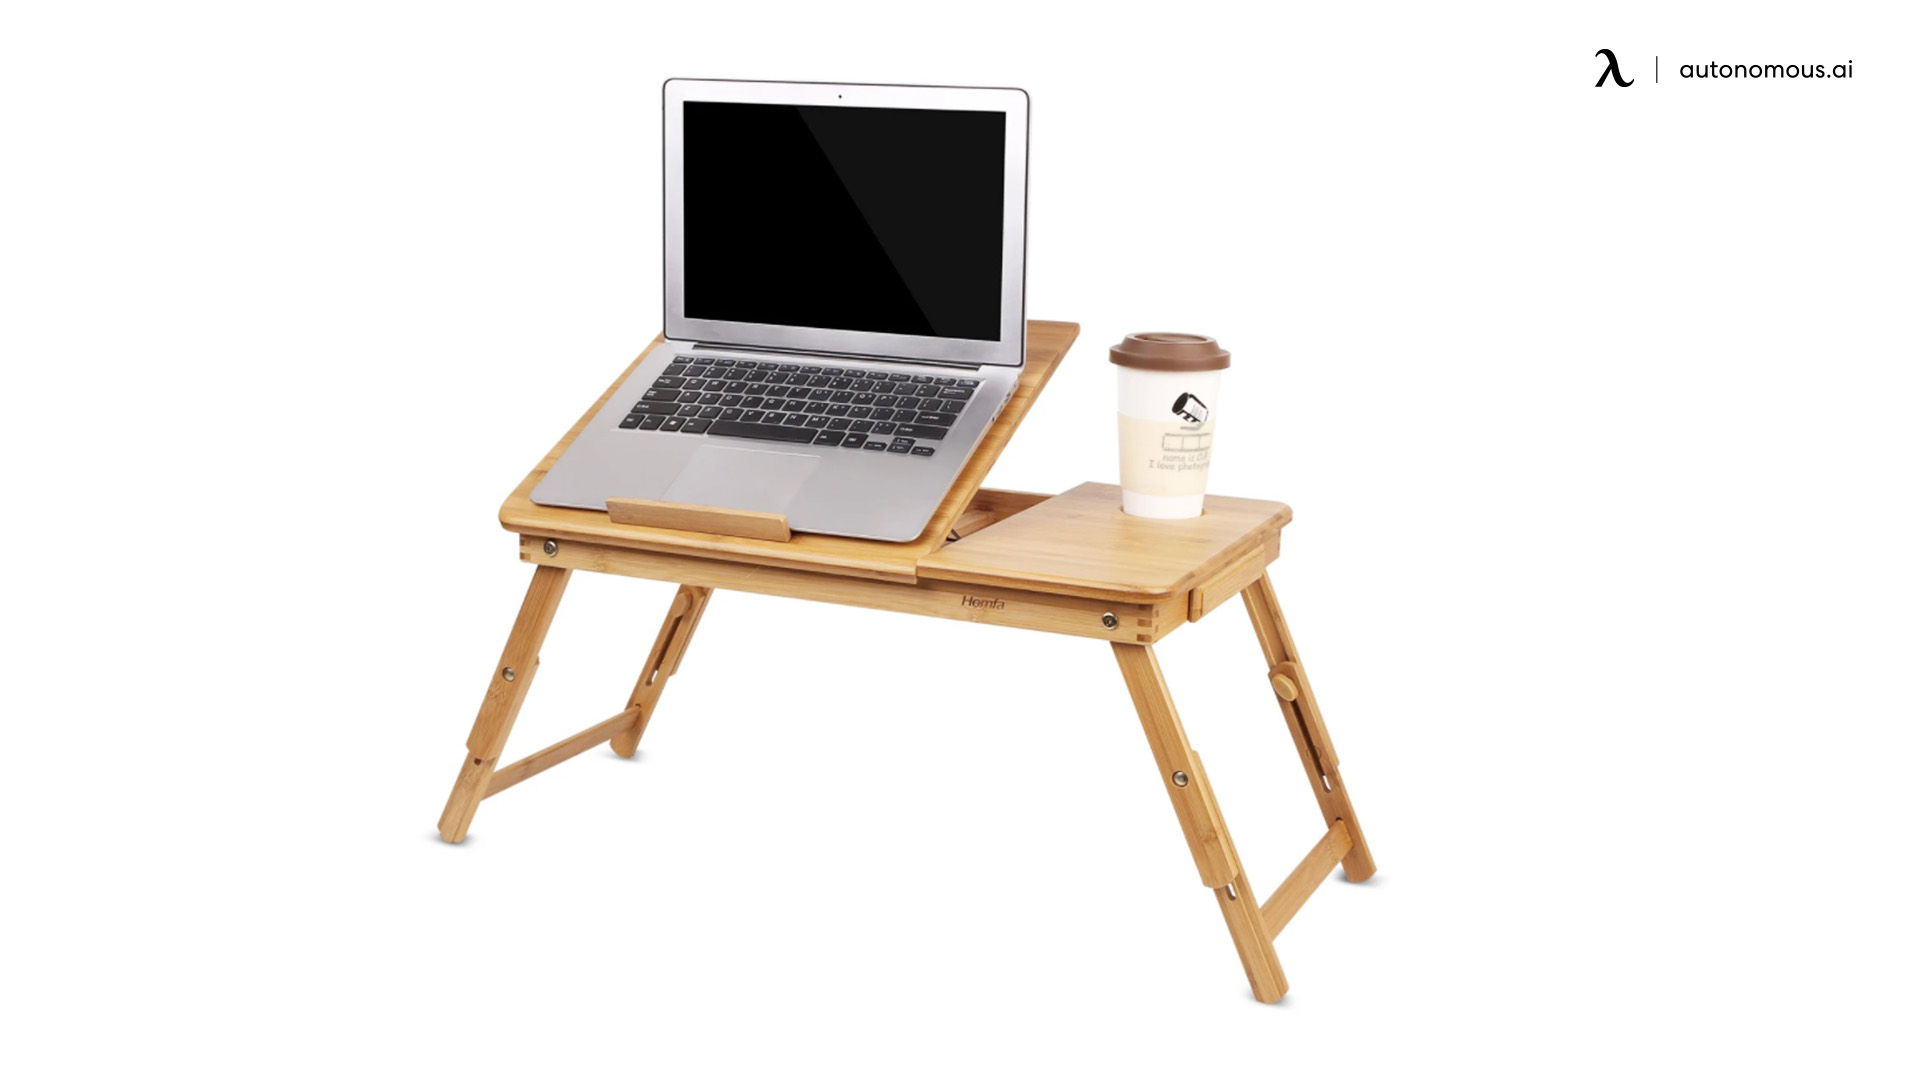 The HOMFA Bamboo Laptop Desk